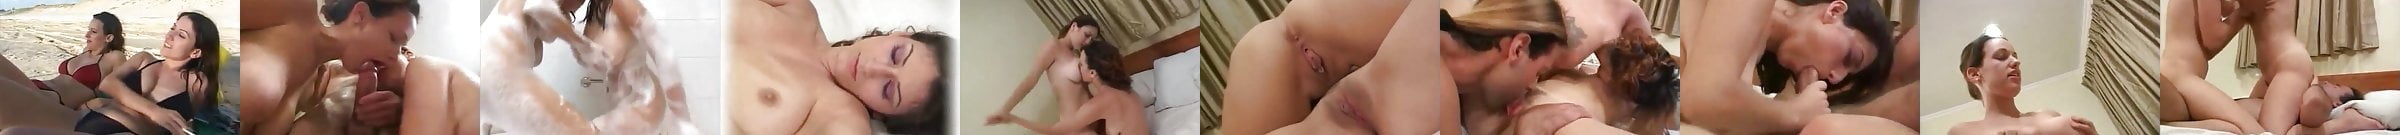 Israeli Porn Videos Sex With Jewish Girls XHamster